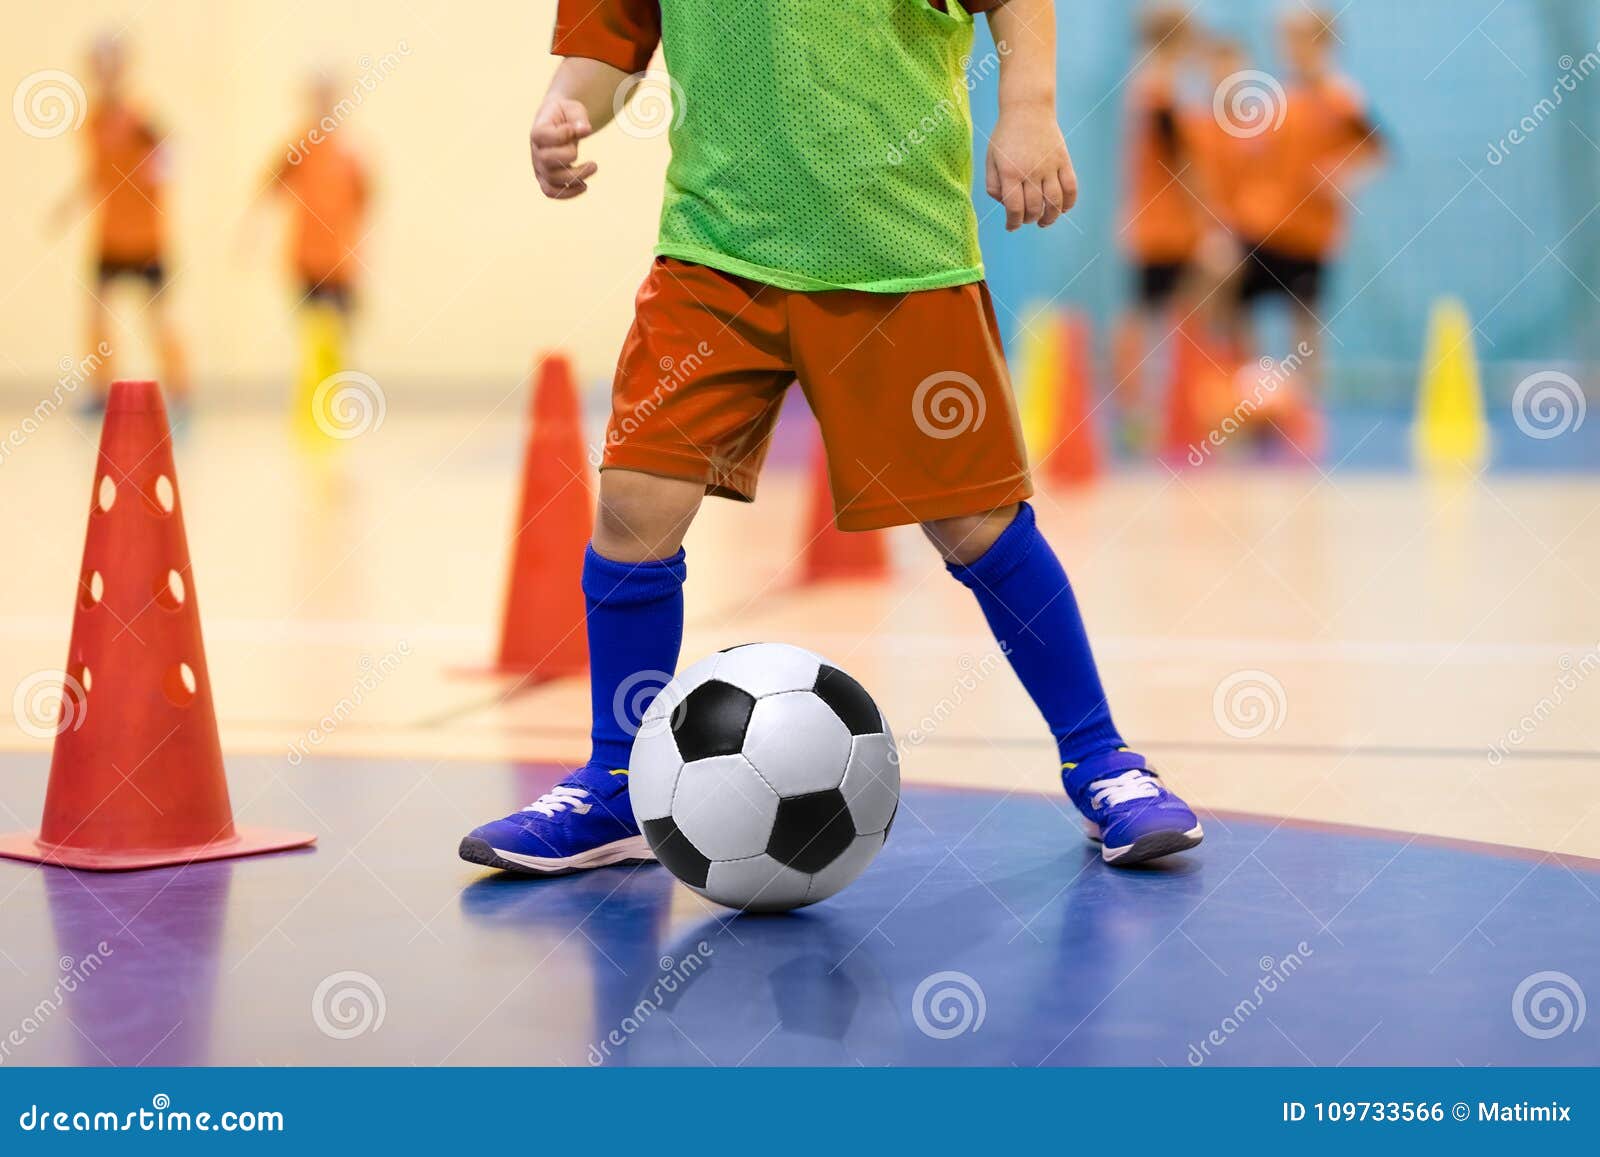 Footballer Dribbling Ball On Training Between Orange Cones Young